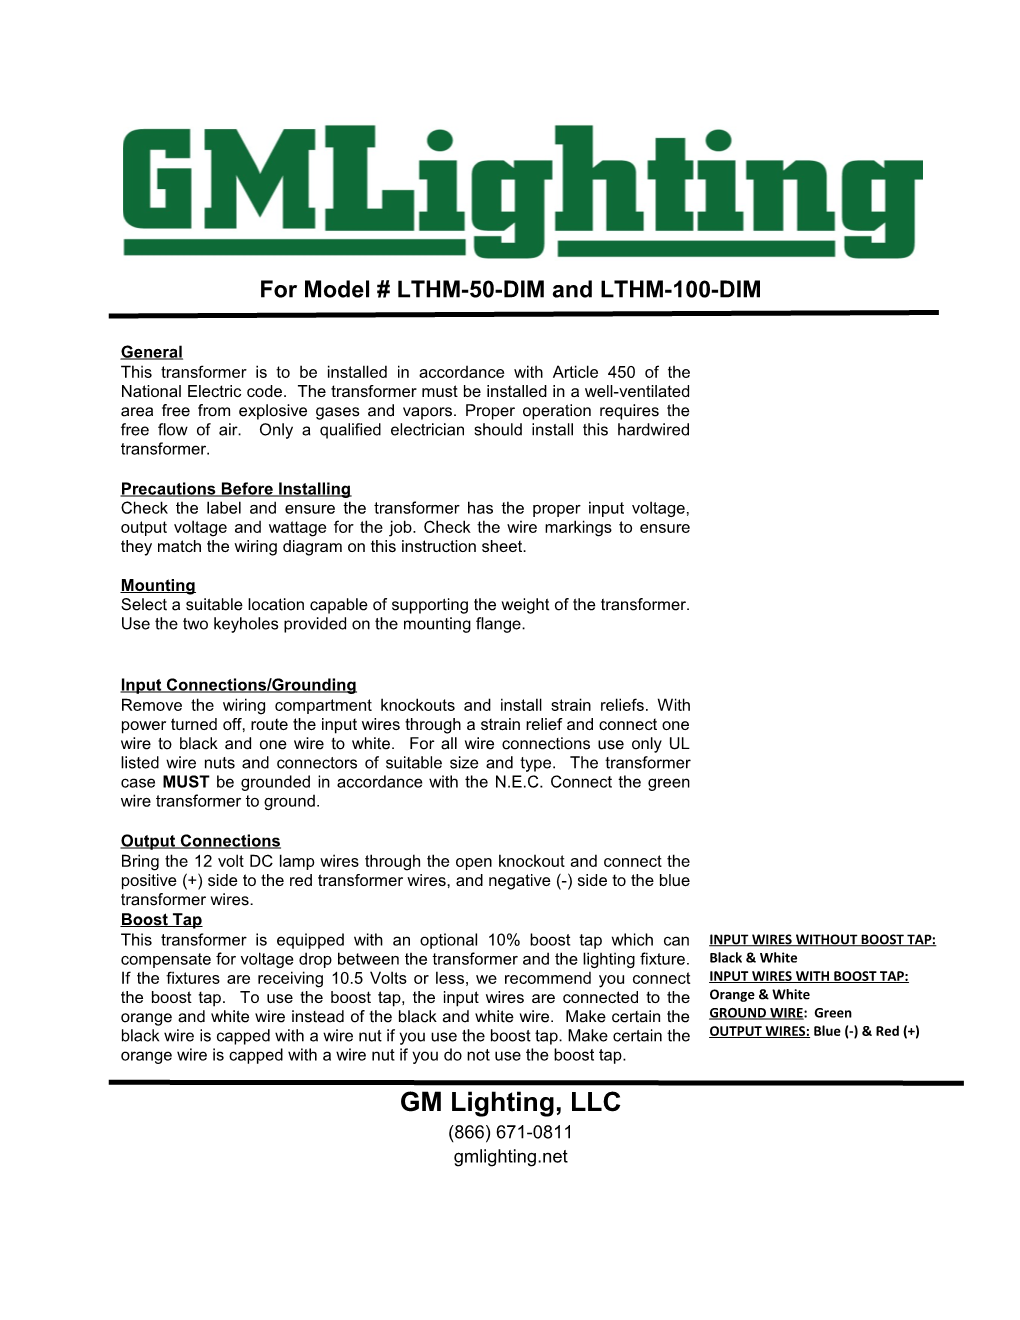 GM Lighting, LLC